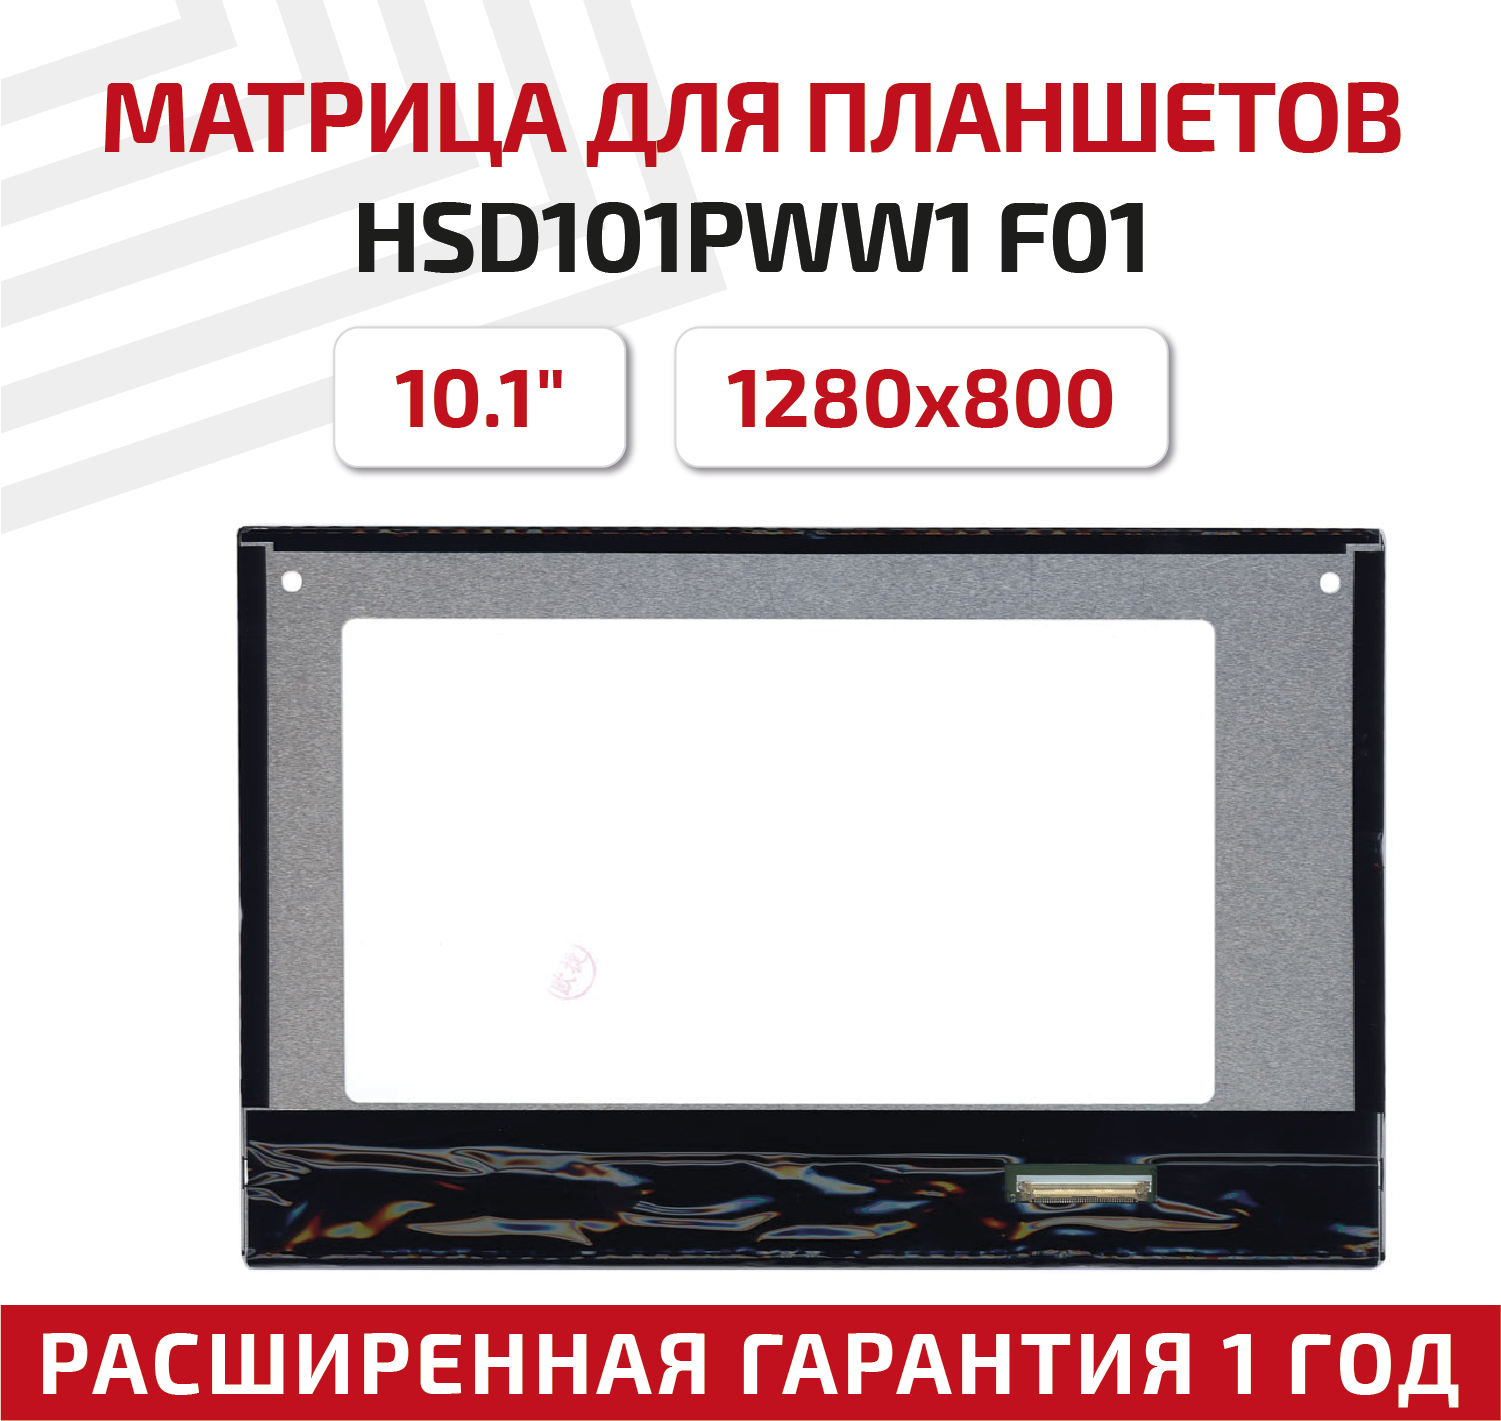 Матрица для планшета HSD101PWW1 F01 10.1